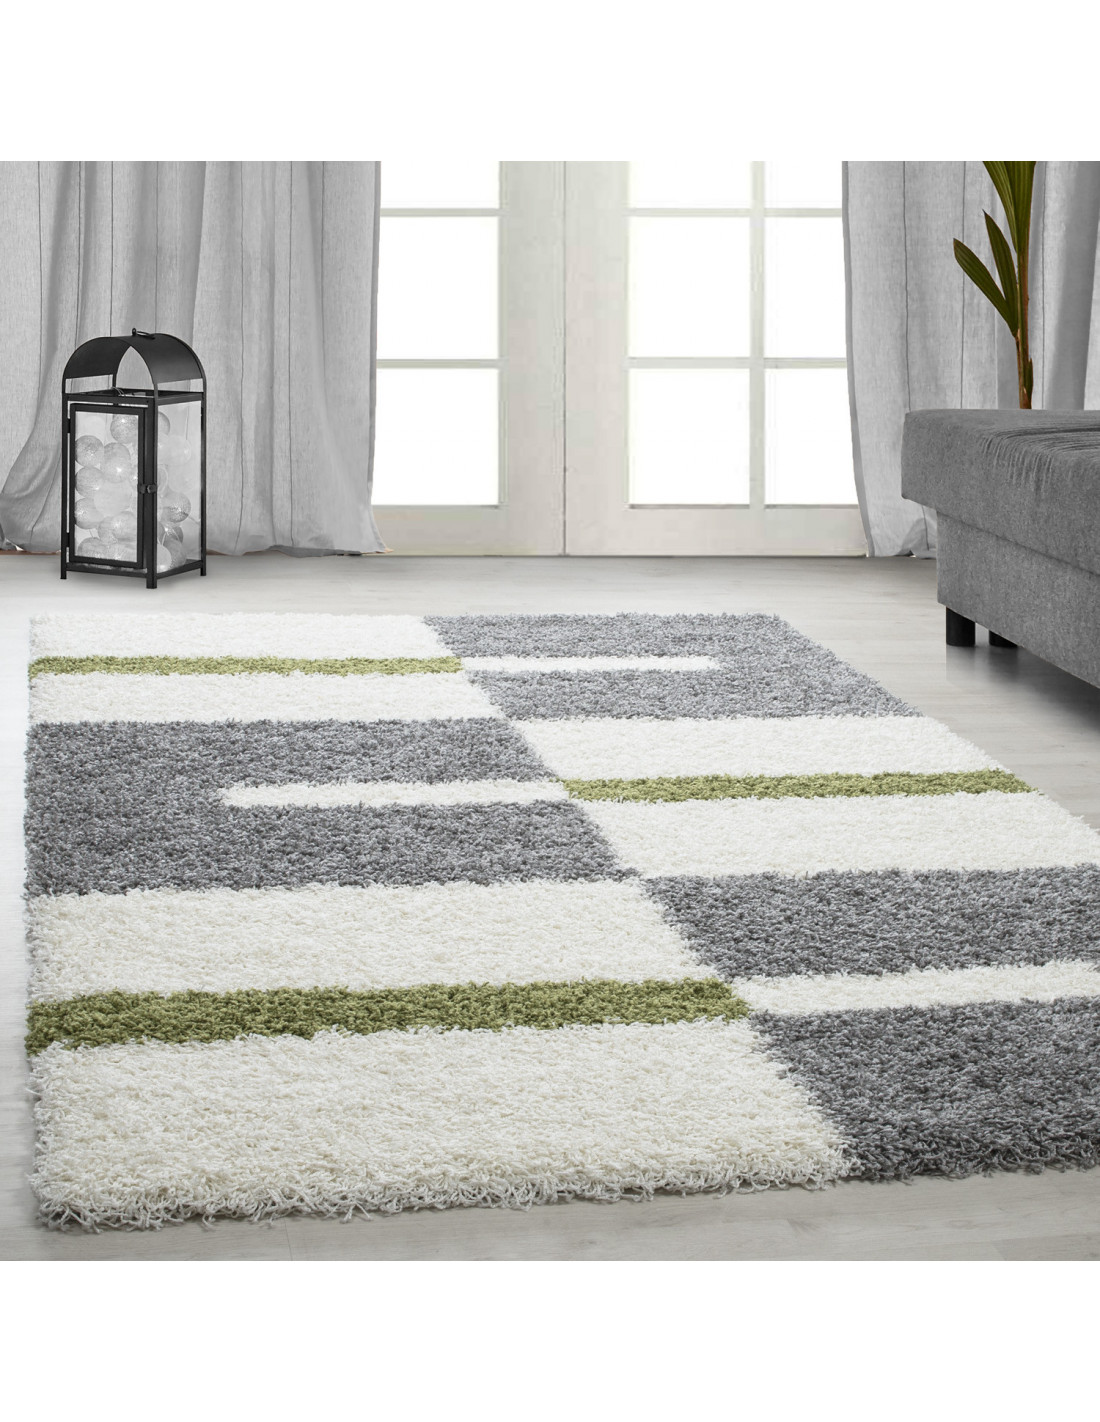 Shaggy carpet, pile height 3cm, gray-white-green